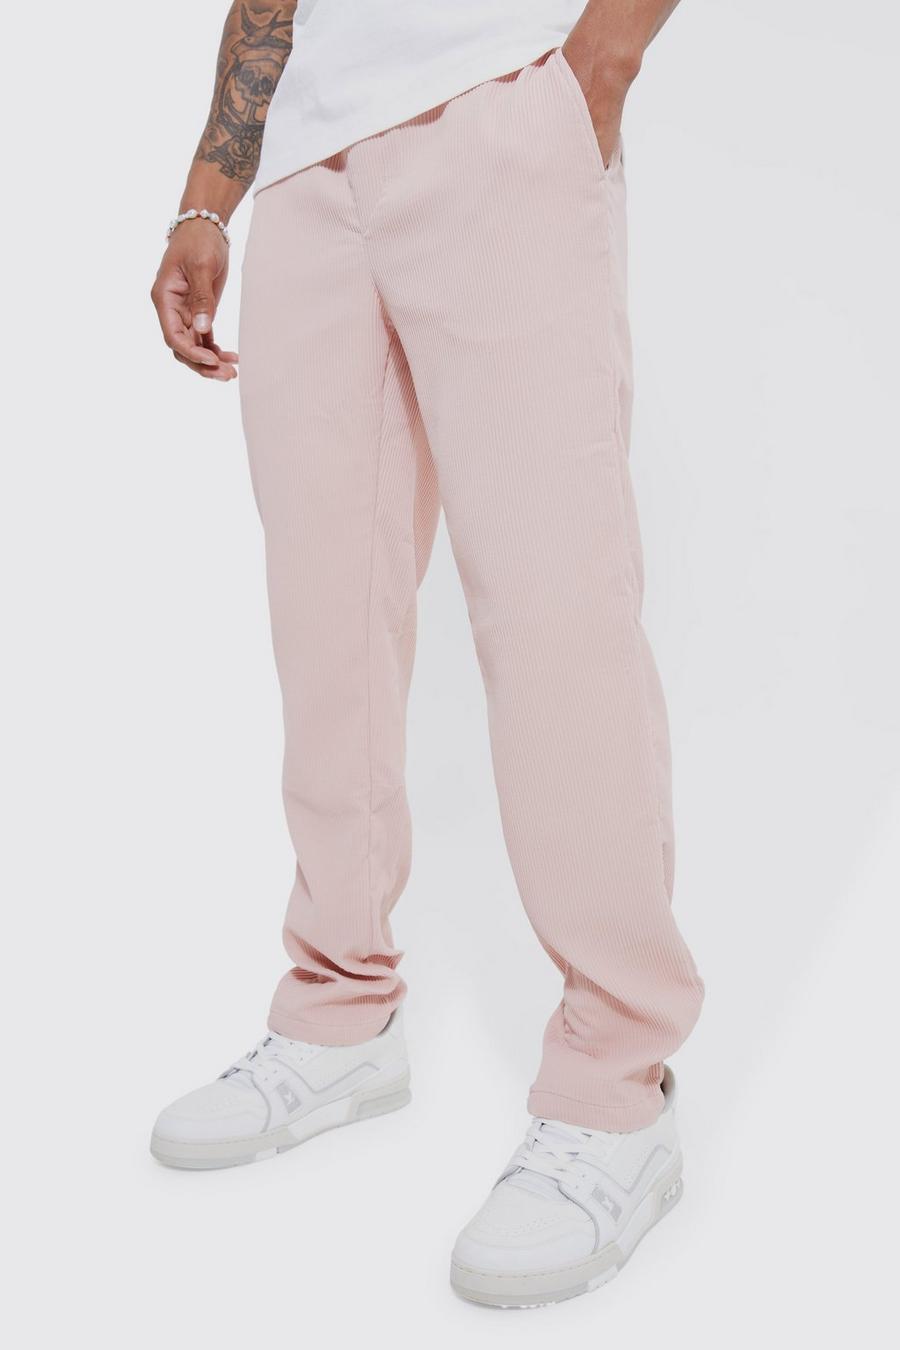 Light pink rosa מכנסיים בגזרה צרה עם קפלים